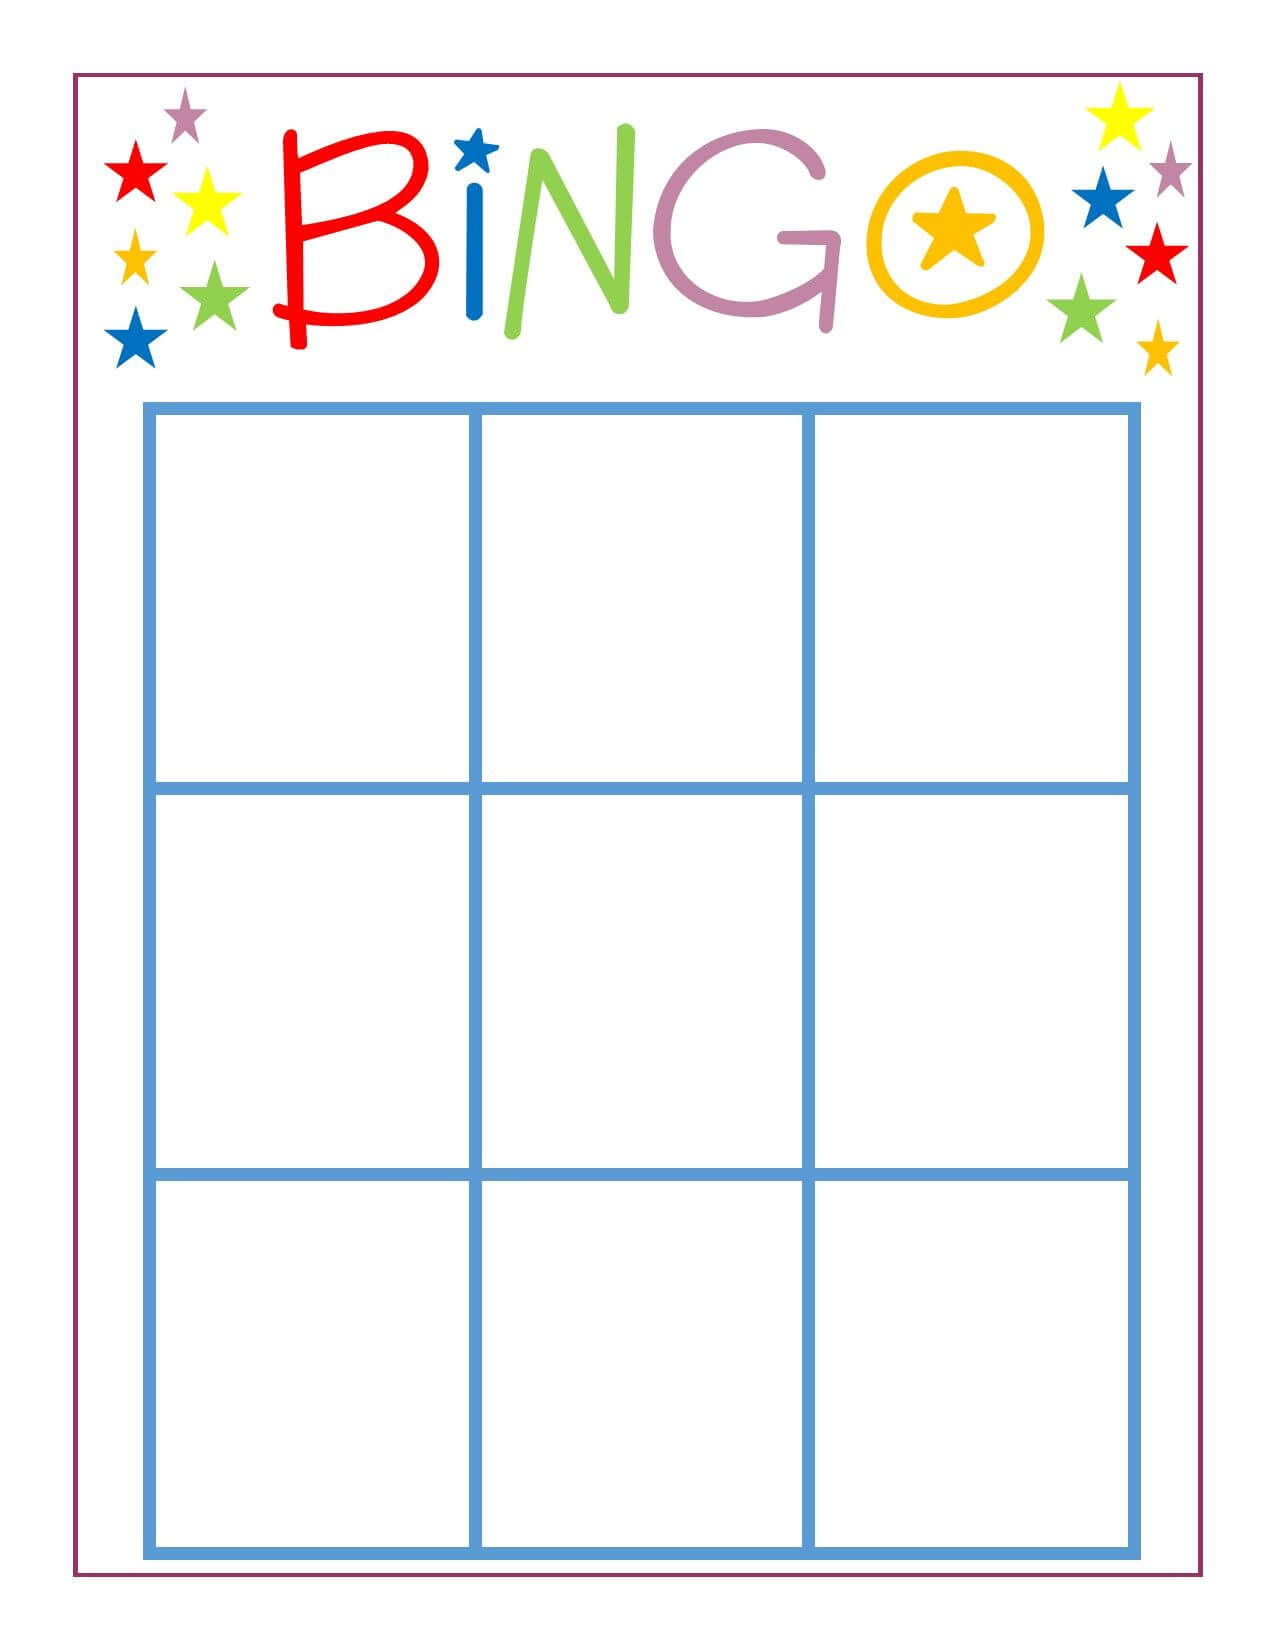 family-game-night-bingo-bingo-card-template-blank-bingo-inside